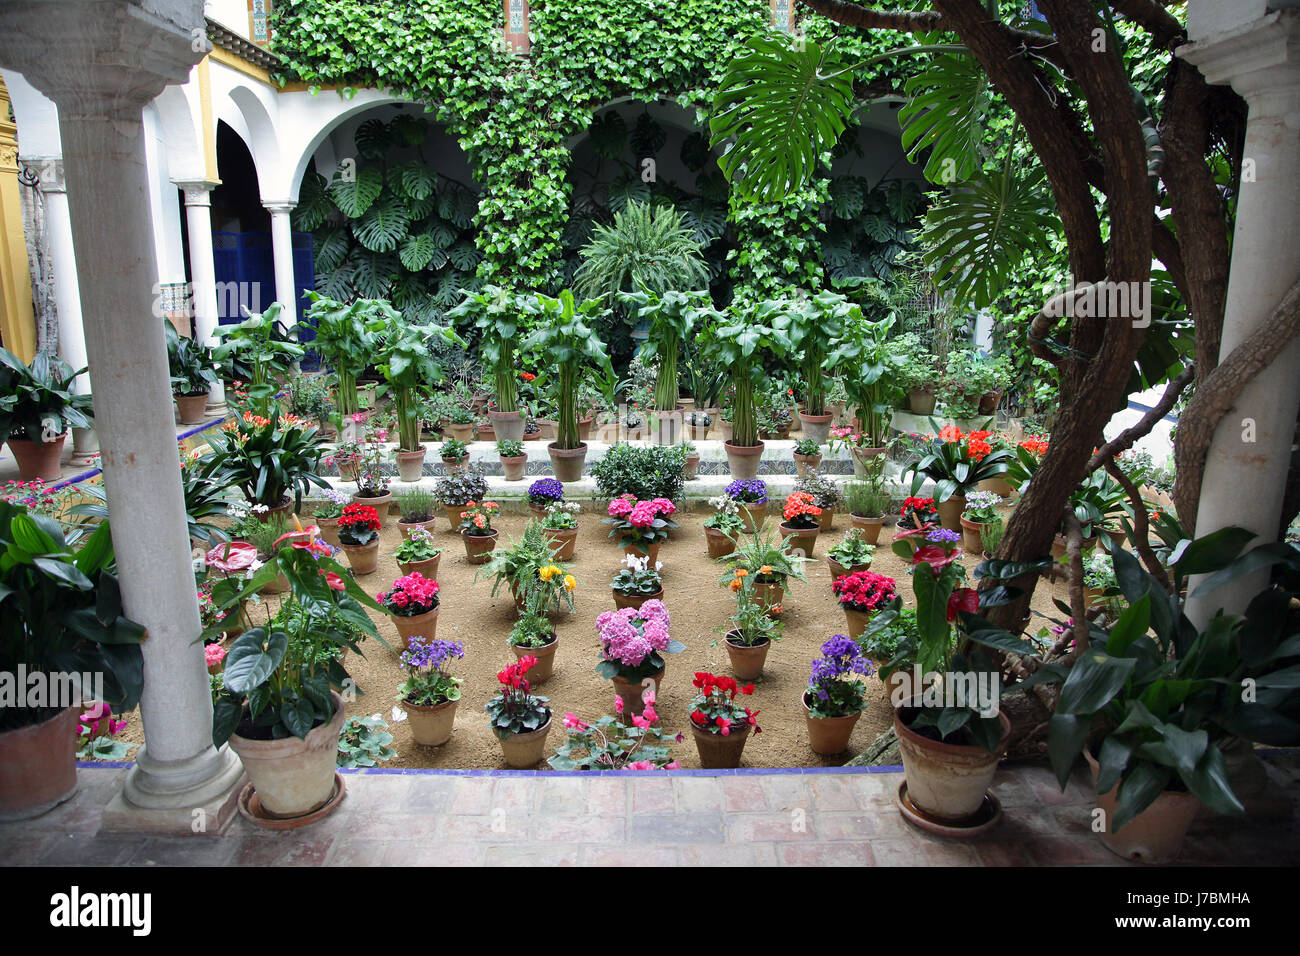 seville barrio de santa cruz garden with flowers spain Stock Photo